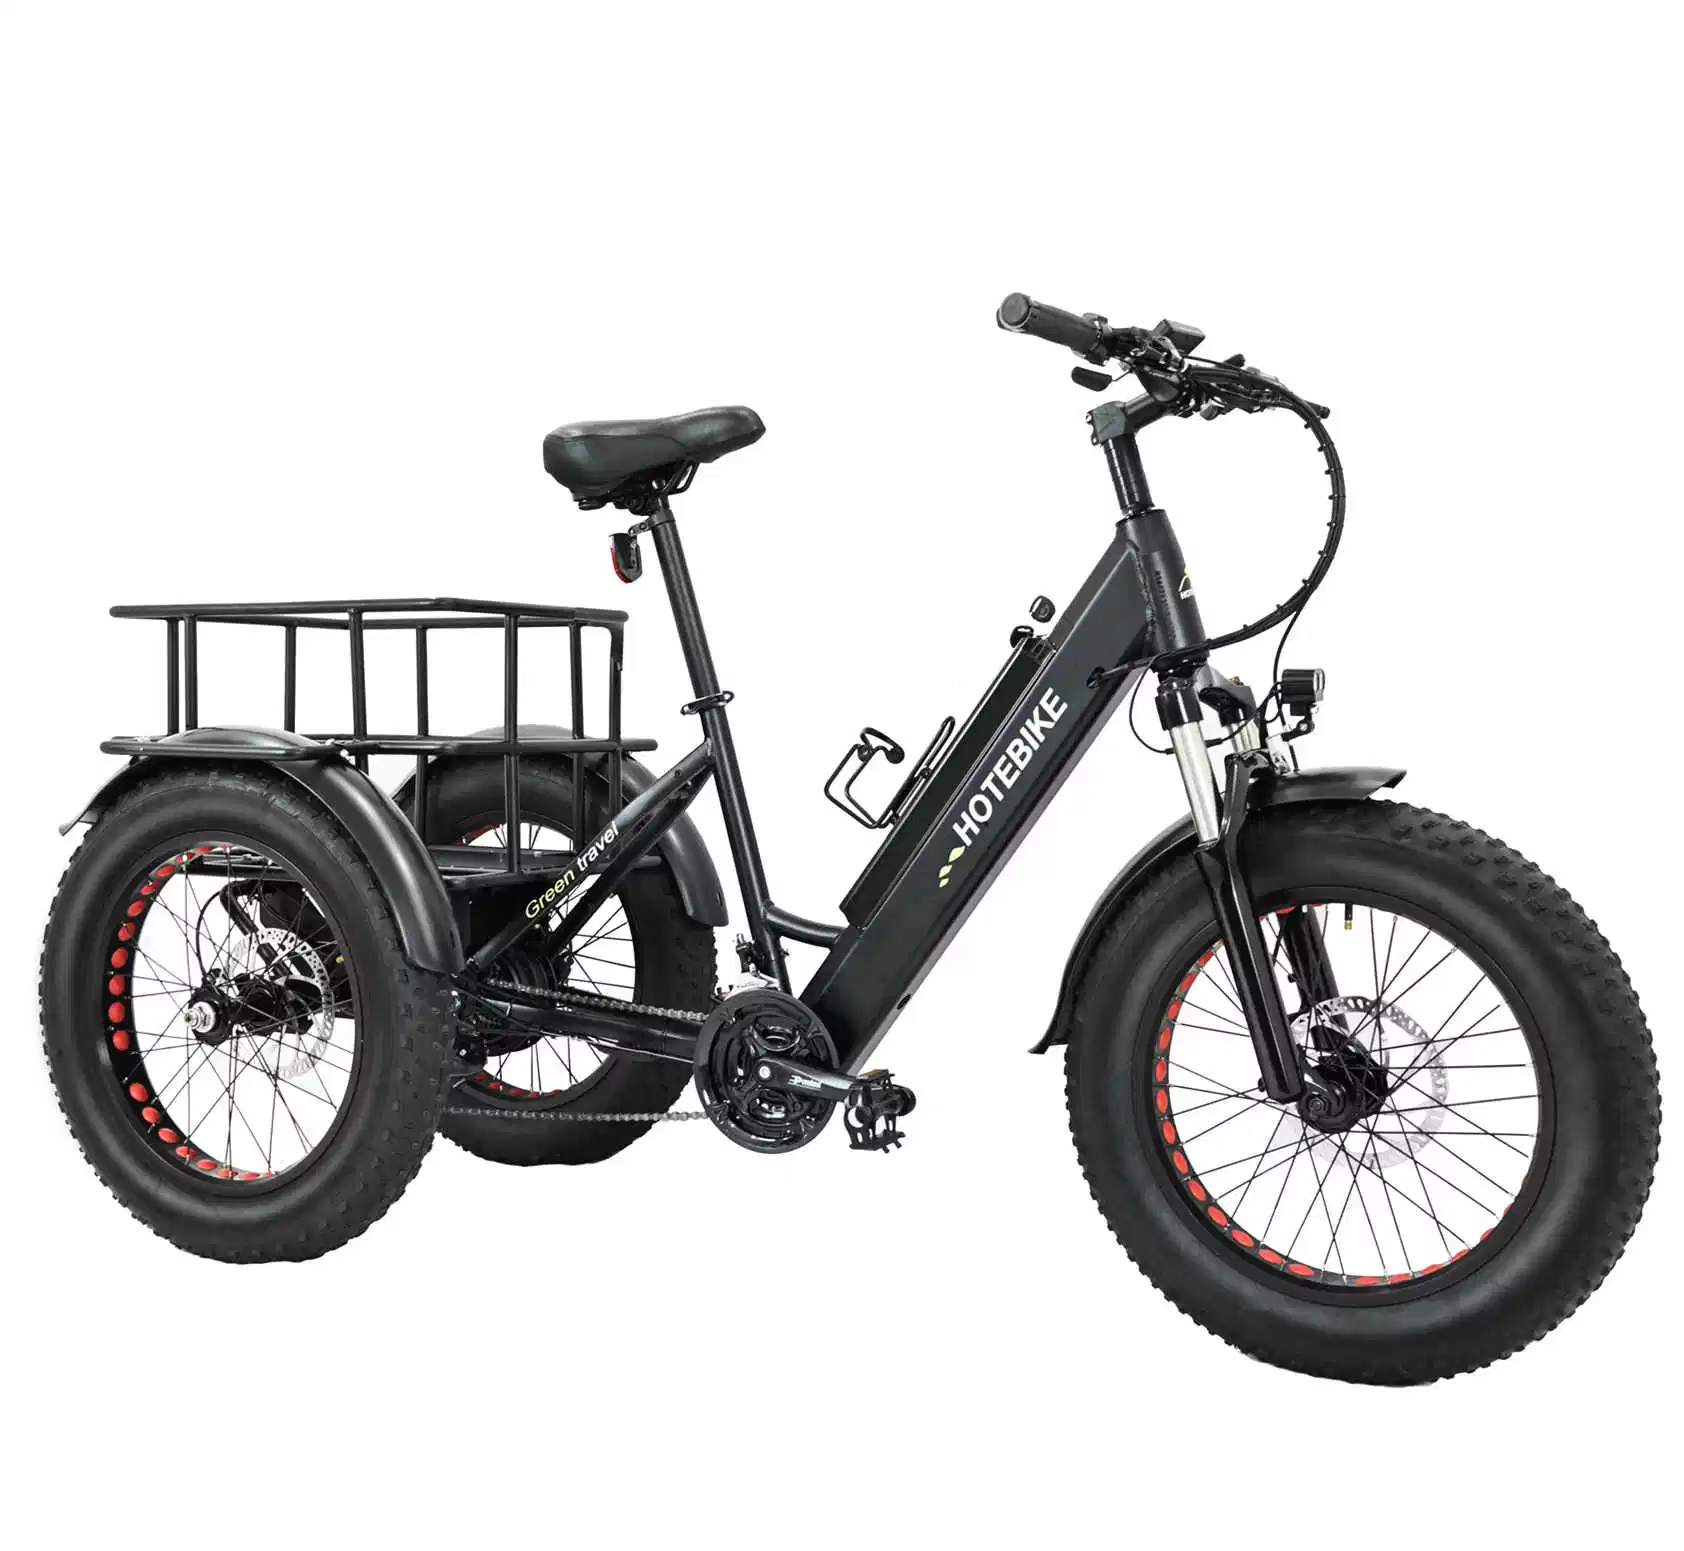 Best Electric Bike E Bike Electric Dirt Bike 500W 250W 350W 500W Motor der Hinterradnabe Dirt Bike Dreirad elektrisch Dreirad